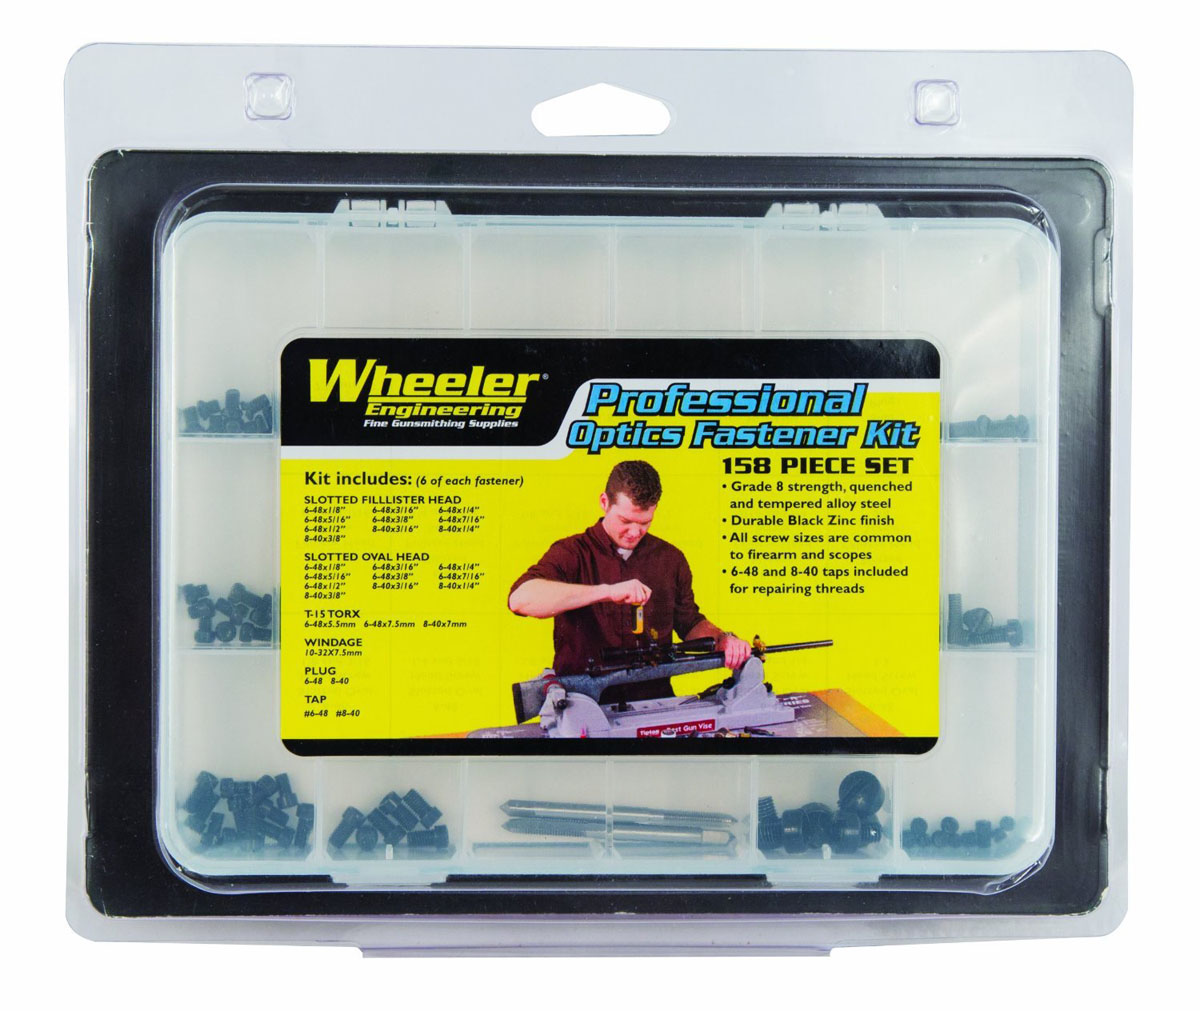 Wheeler Engineering Professional Optics Fastener Kit